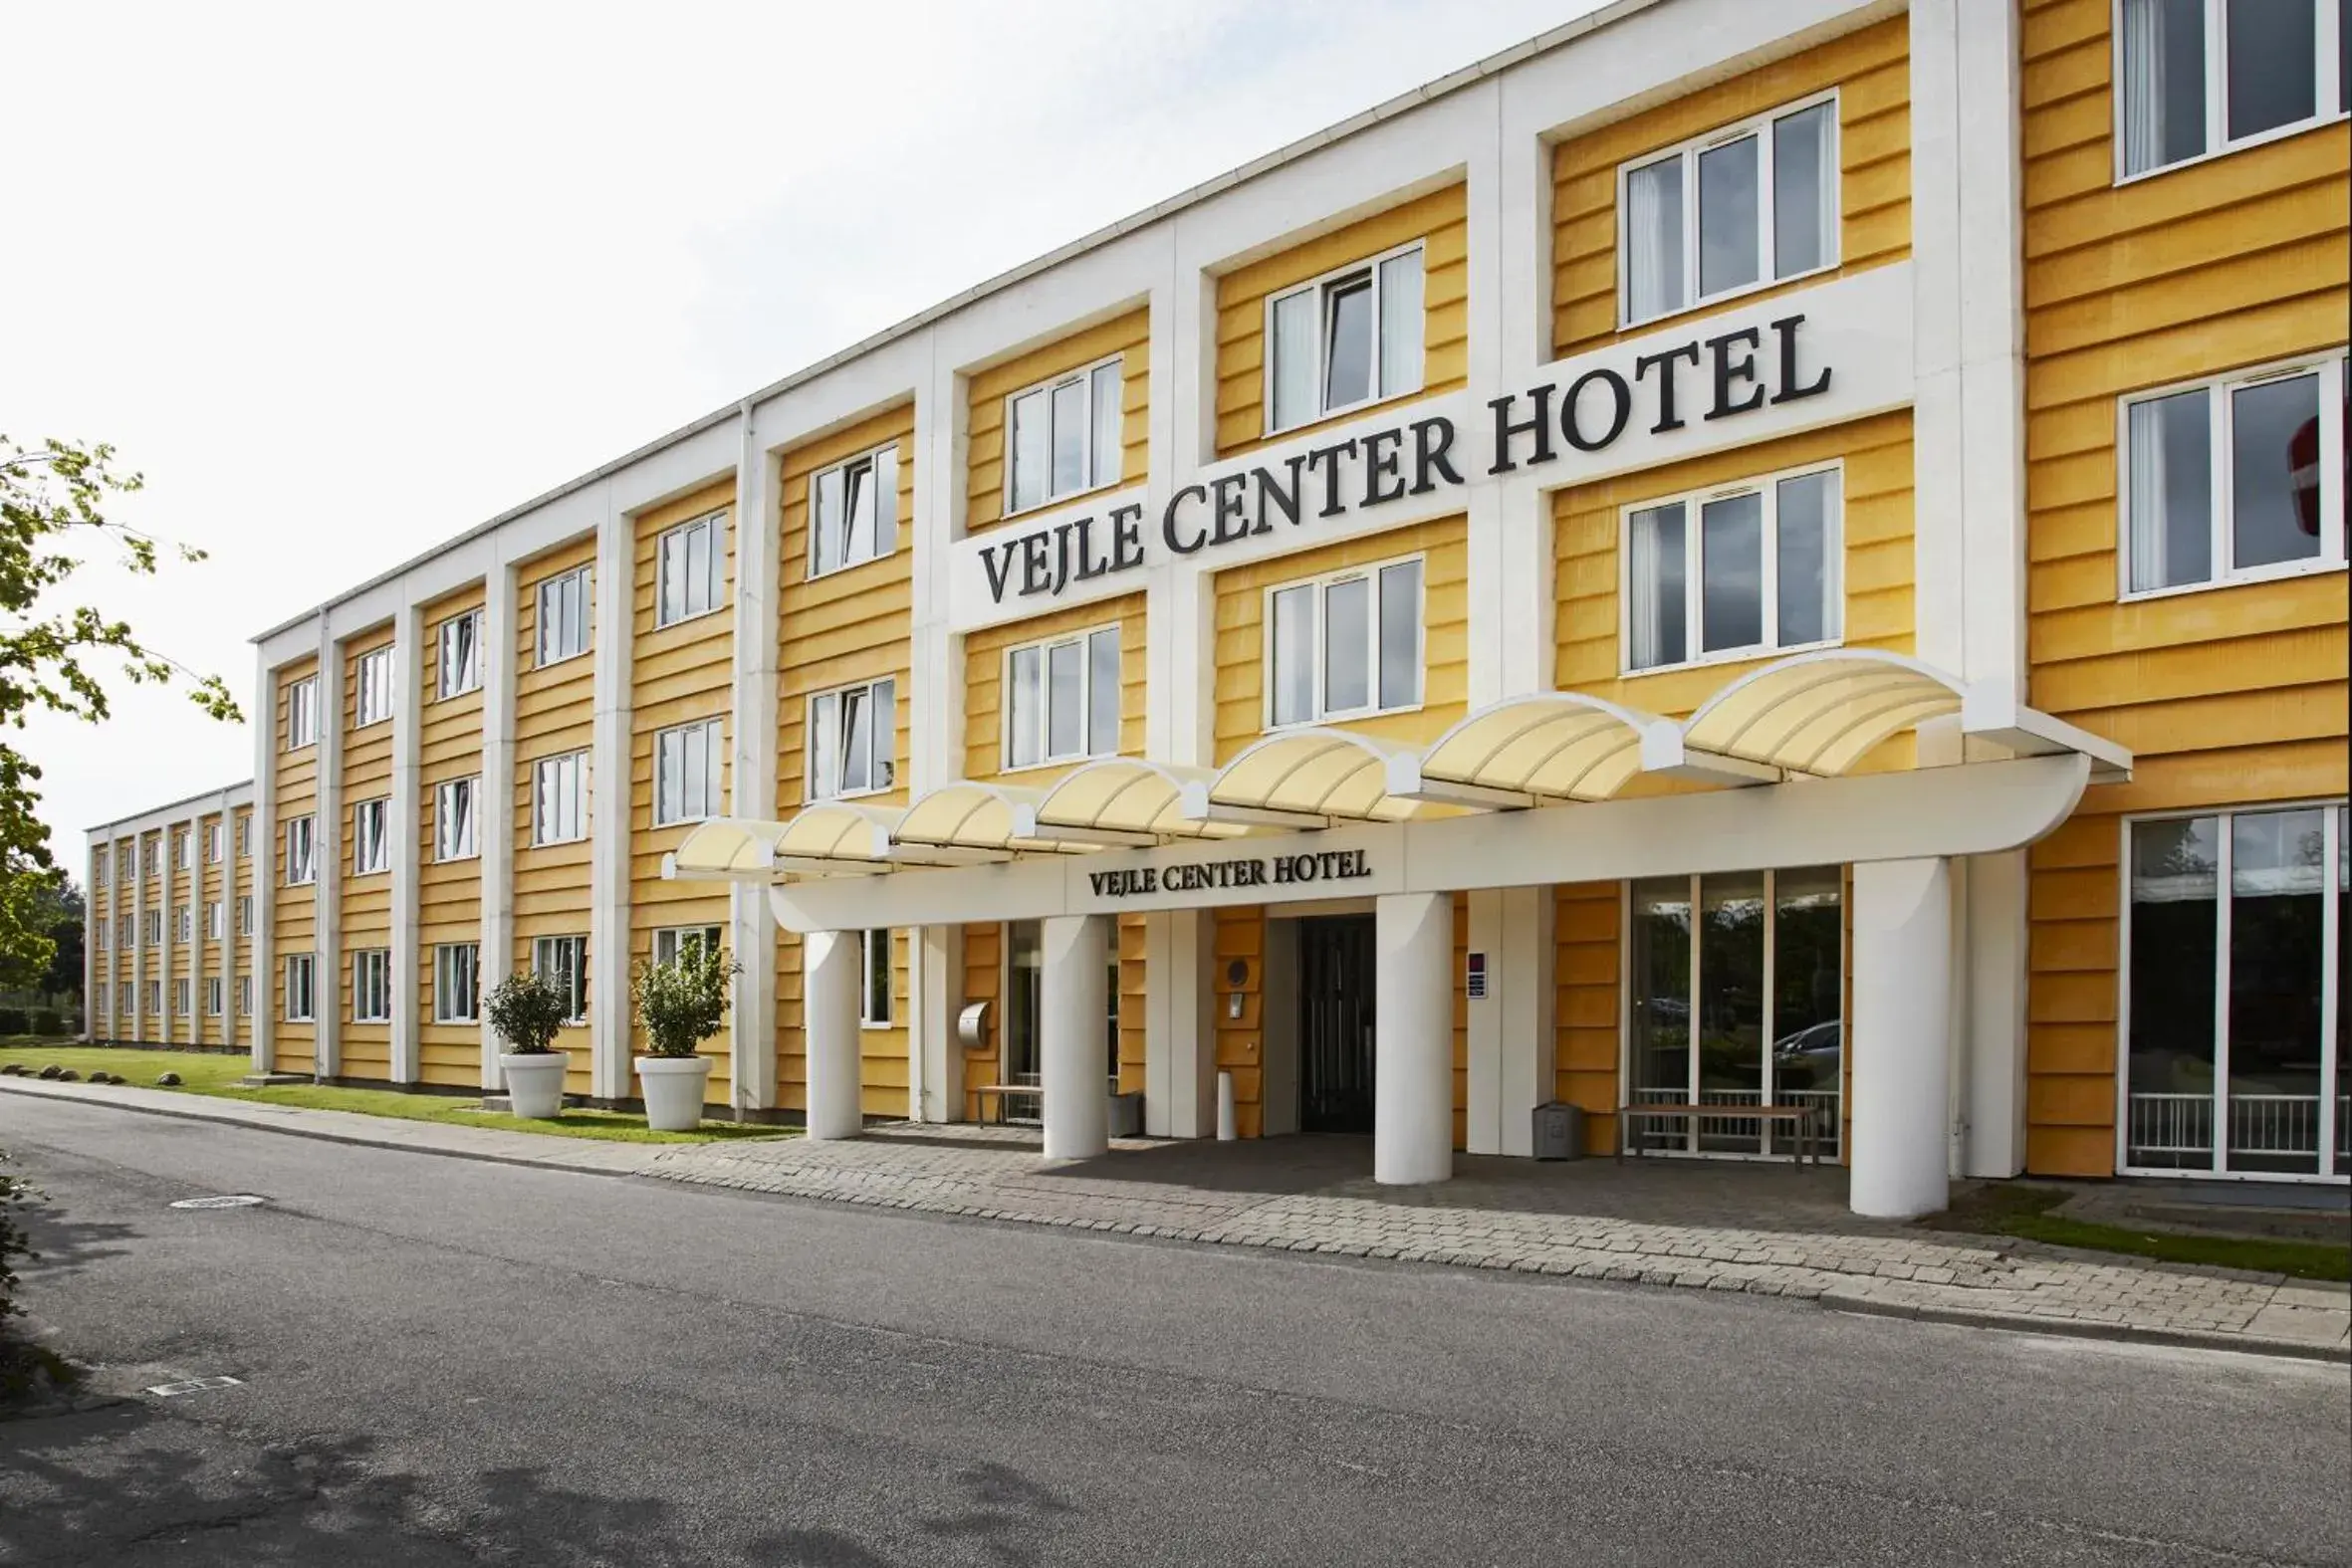 Facade/entrance, Property Building in Vejle Center Hotel